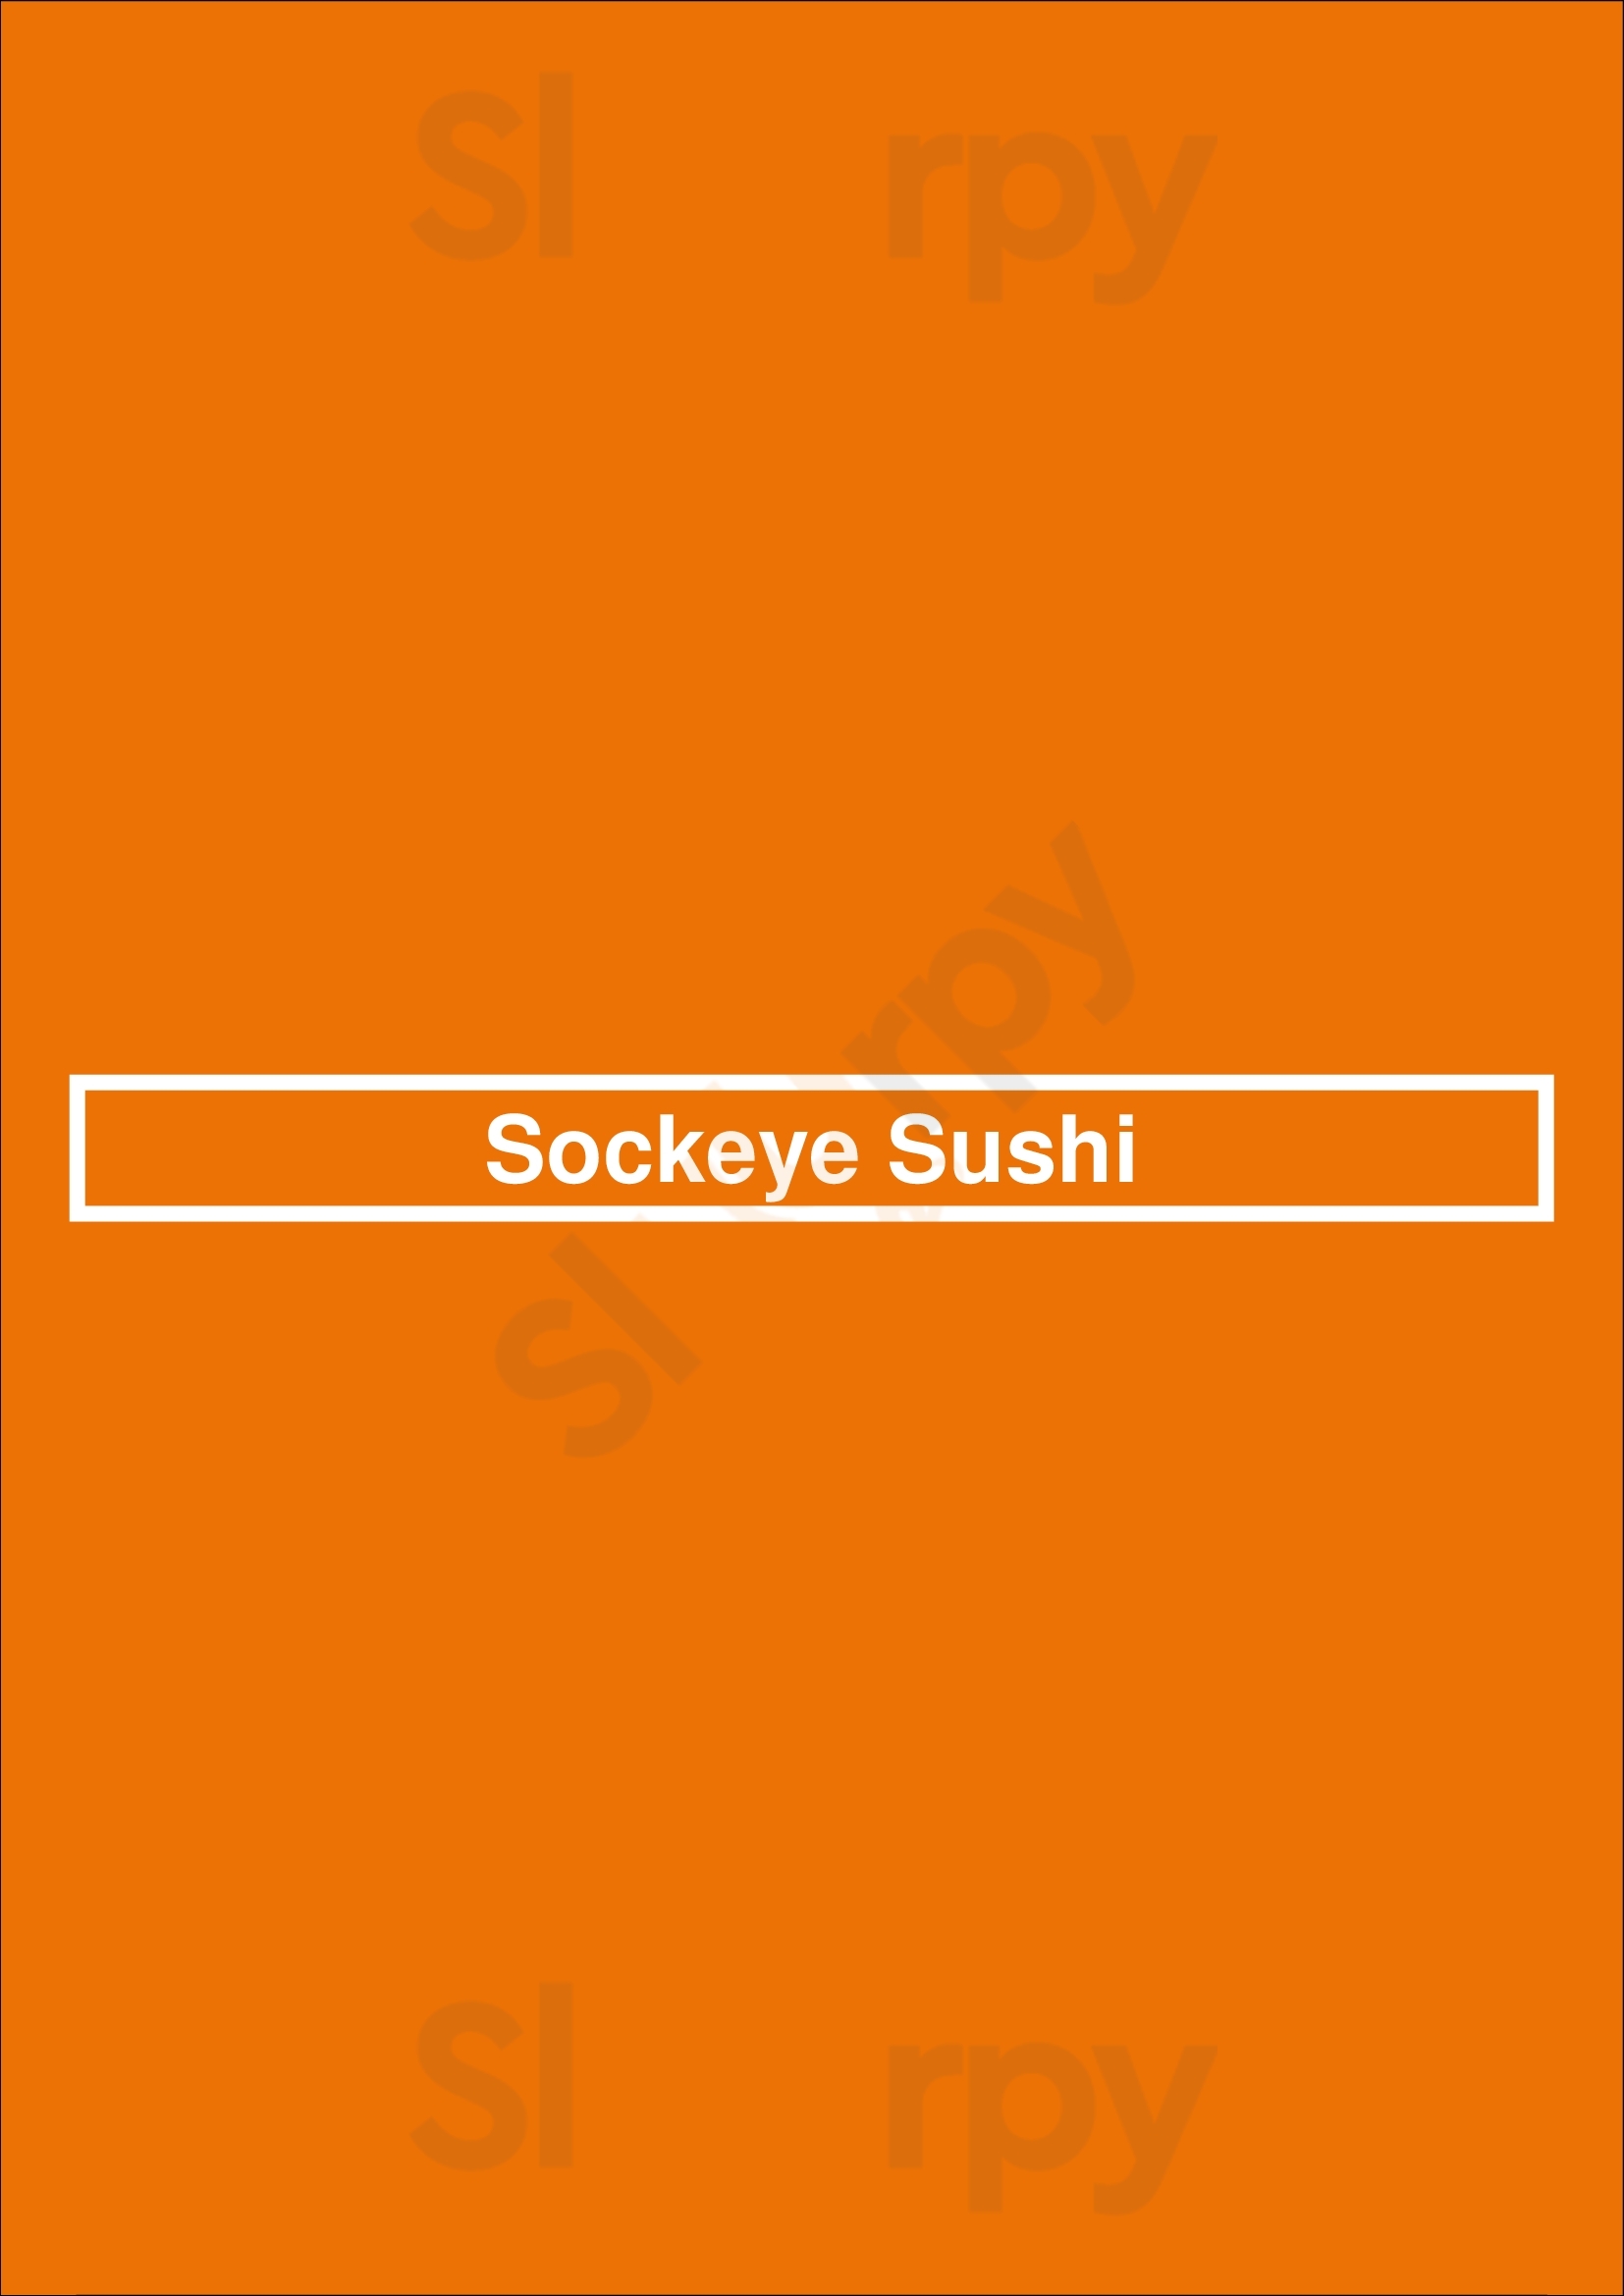 Sockeye Sushi Surrey Menu - 1